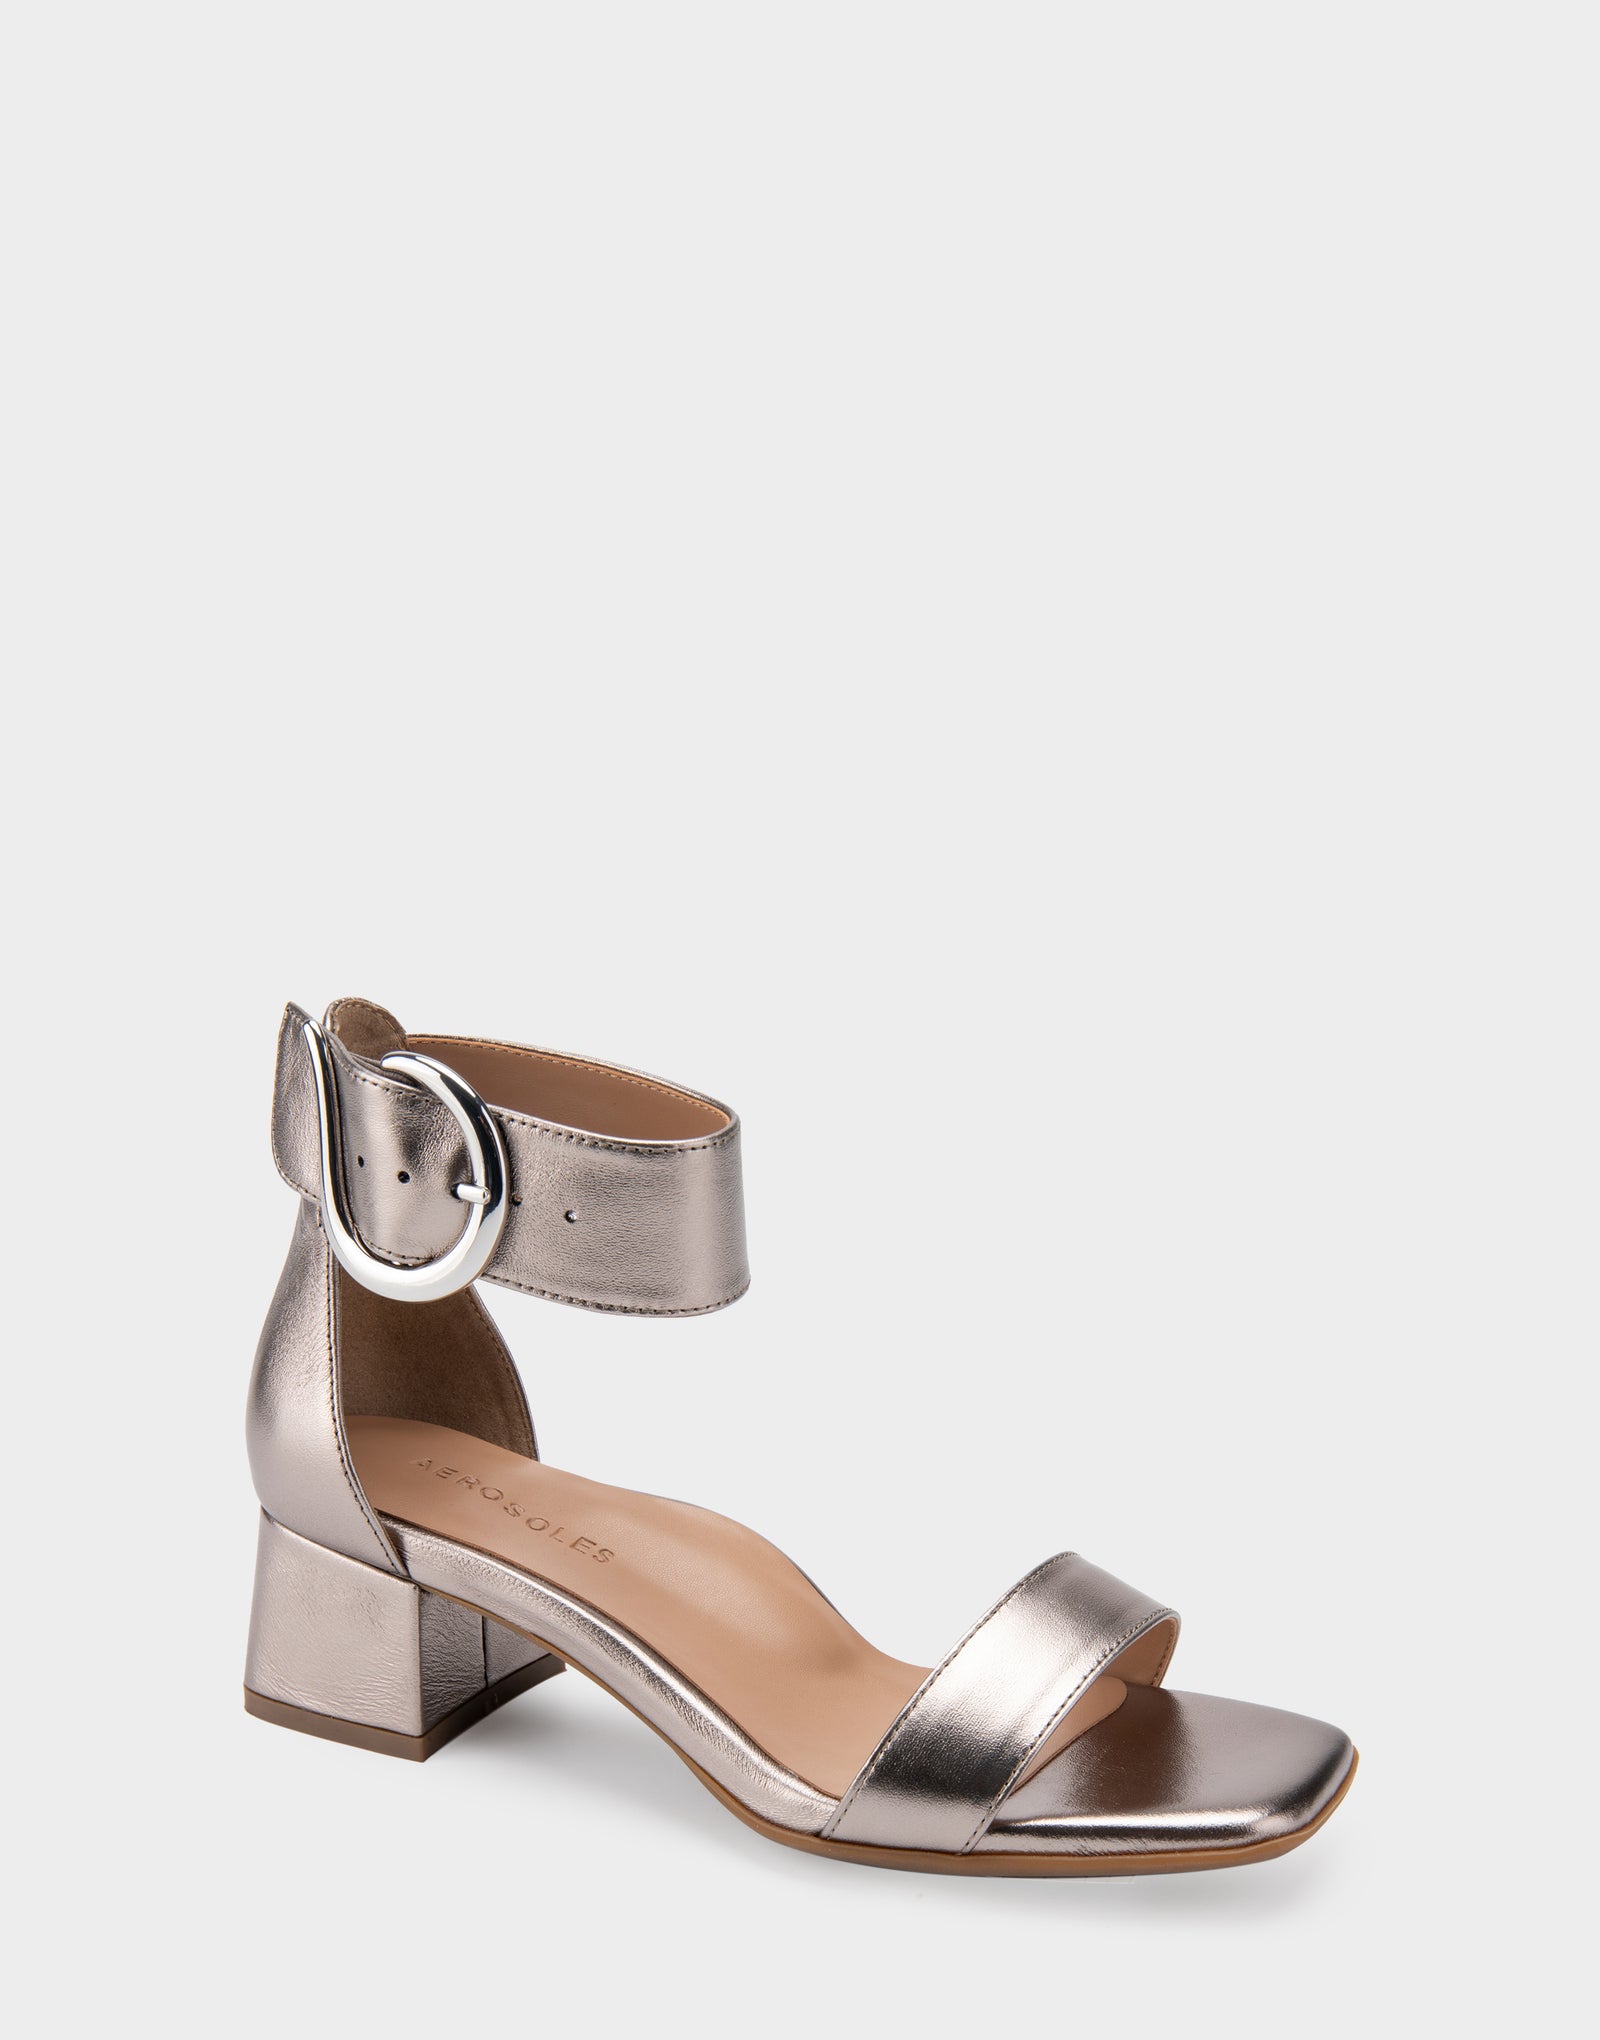 Buy Rocia Tan ankle strap block heels for Women Online at Regal Shoes  |1274554